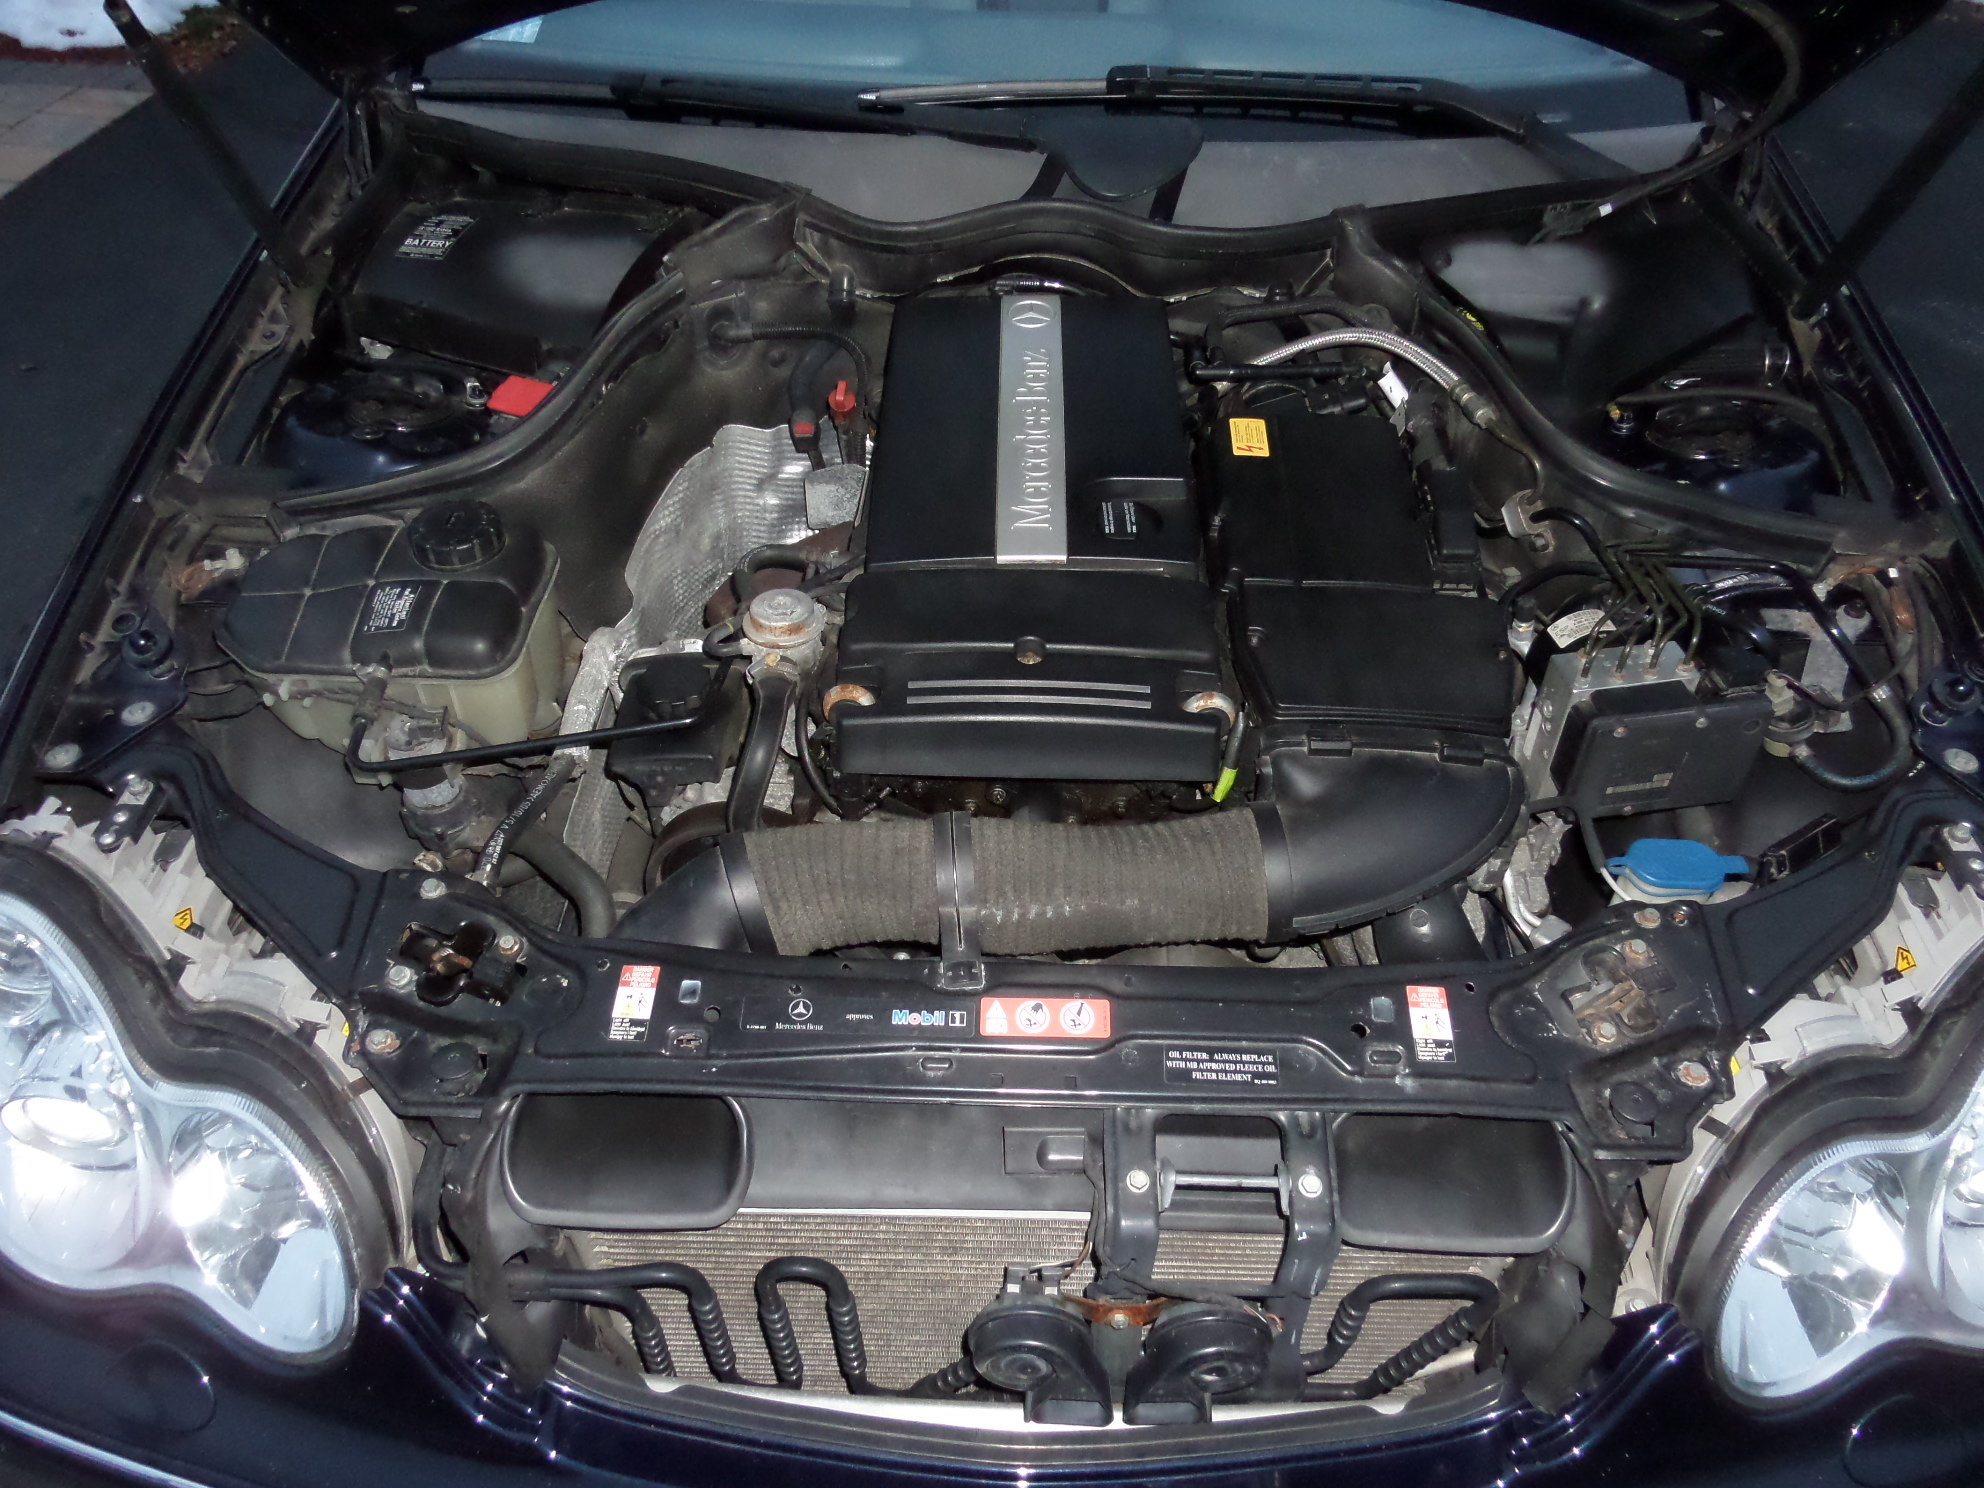 2005 mercedes c230 kompressor engine problems